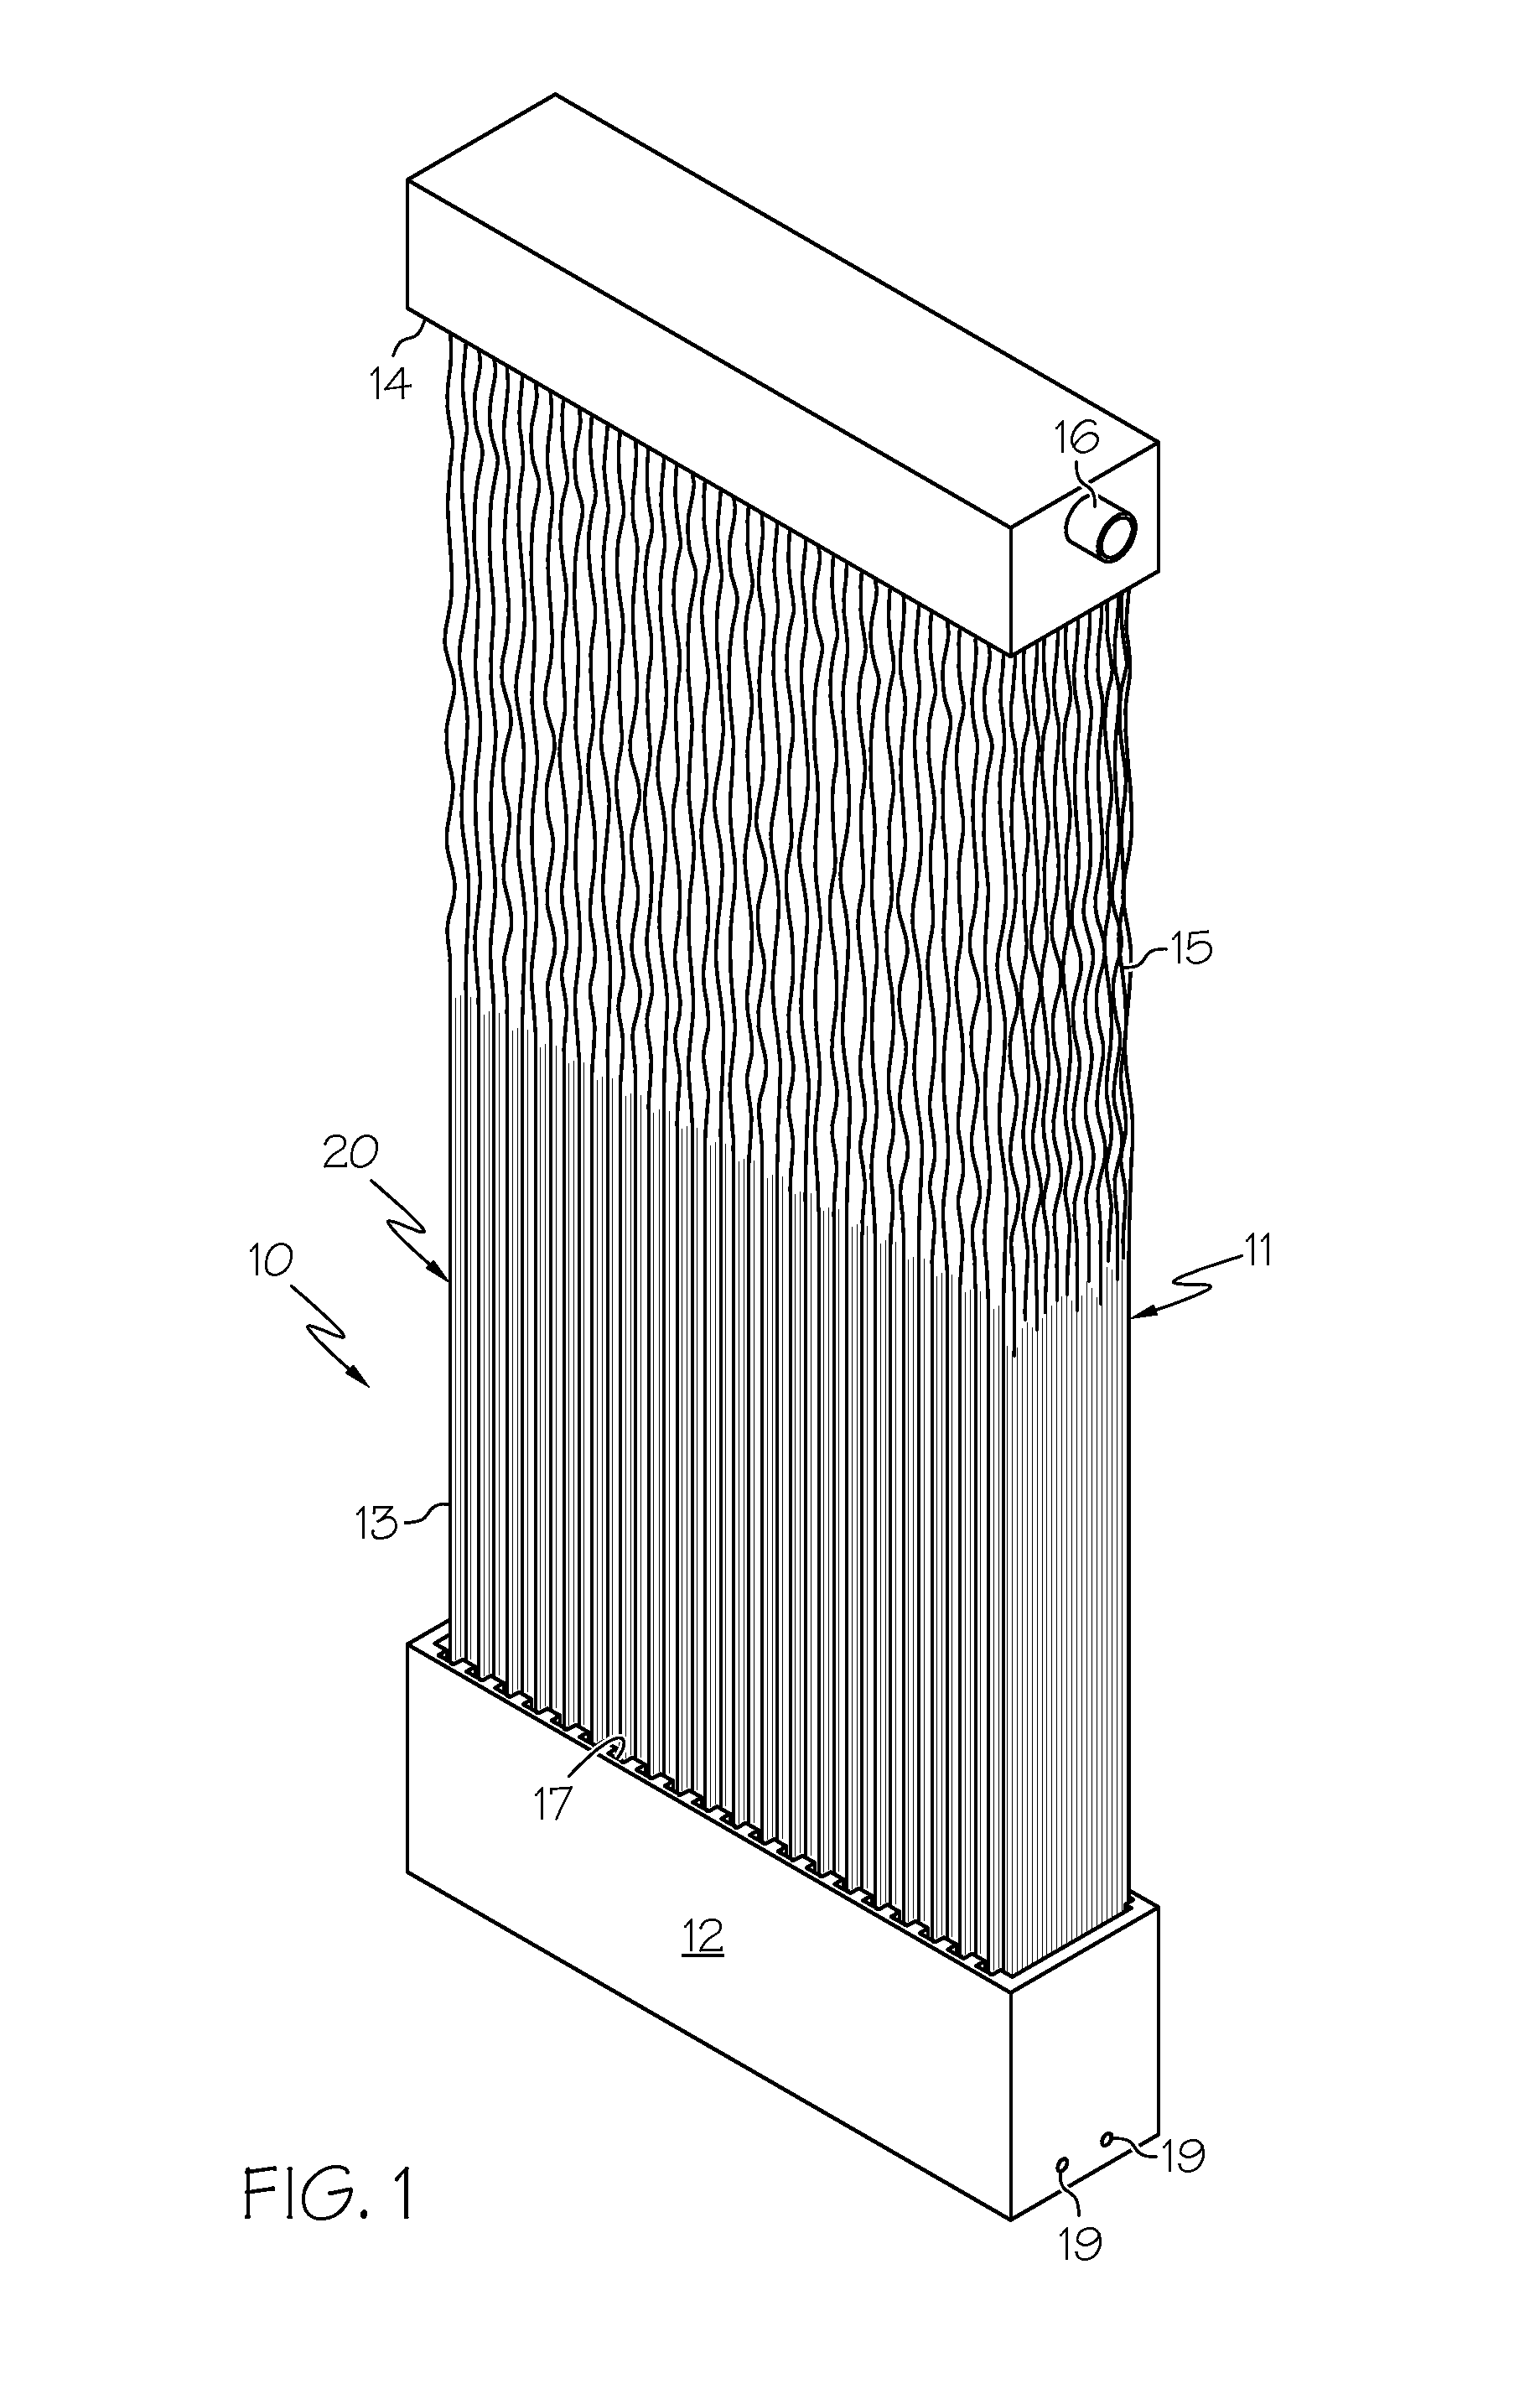 Hollow fiber membrane module with miniskeins in miniheaders having a zig-zag configuration